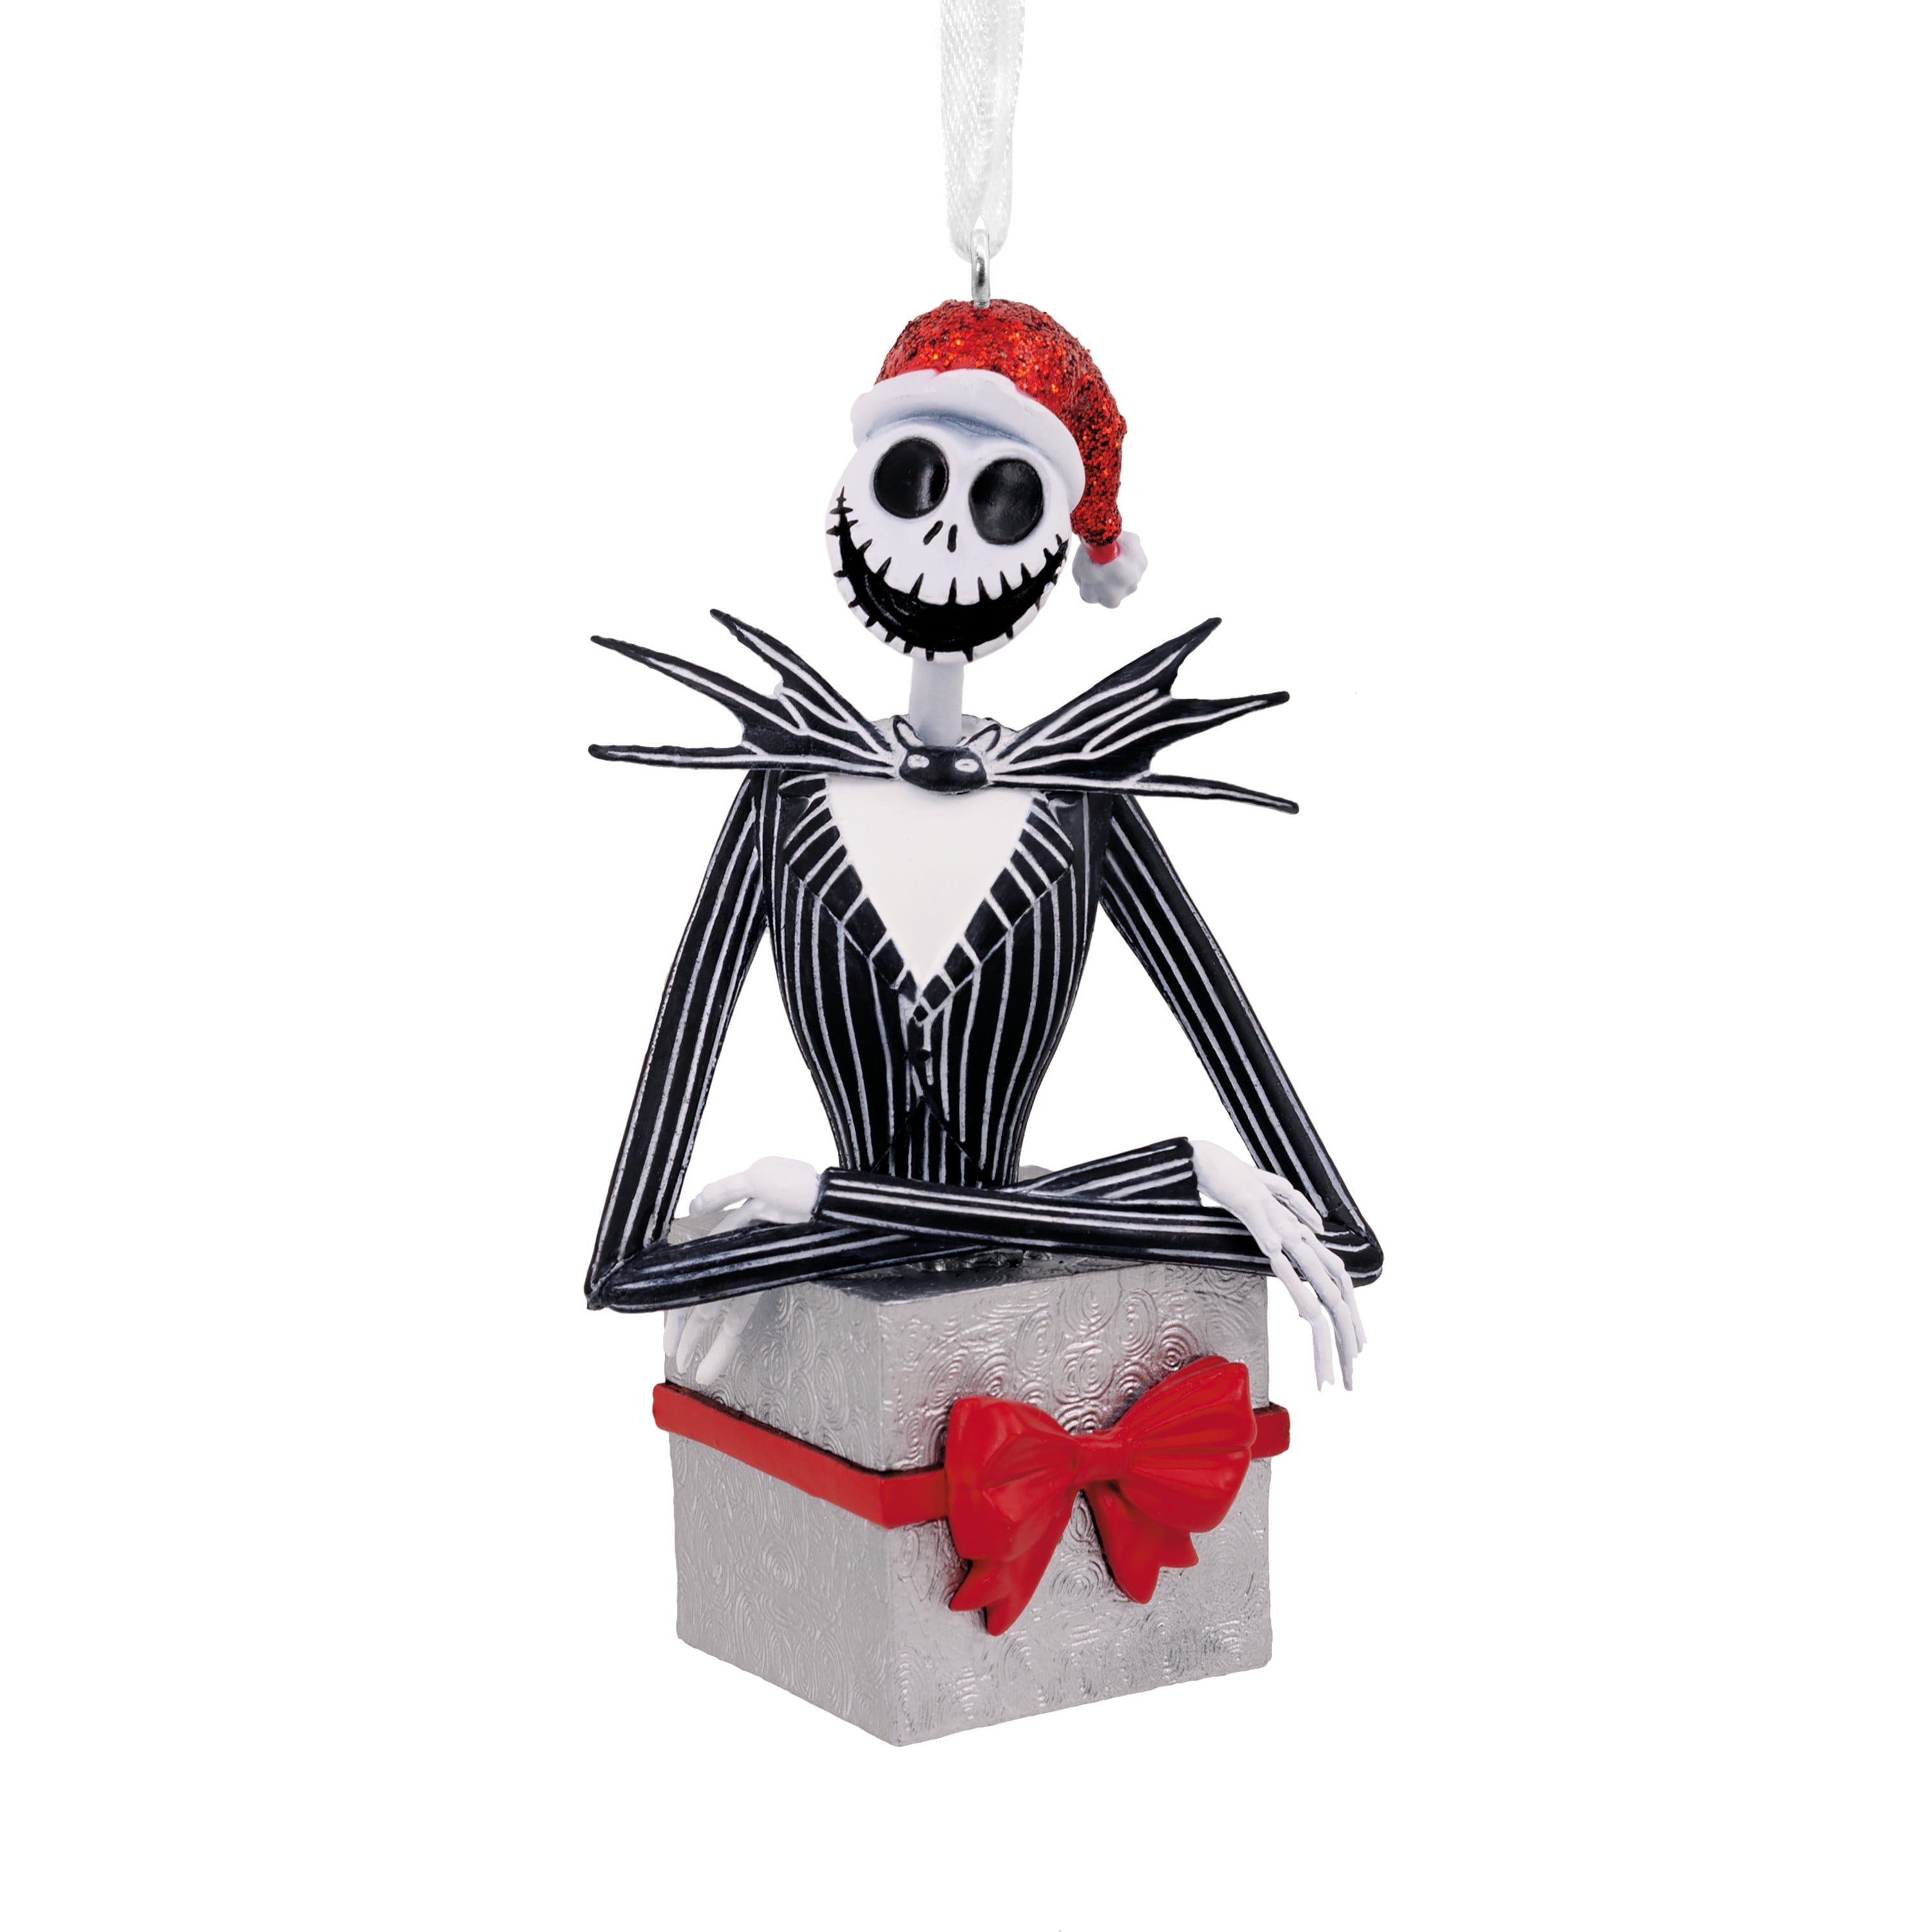 Hallmark Ornament (Disney Tim Burton's The Nightmare Before Christmas Jack Skellington in Present)